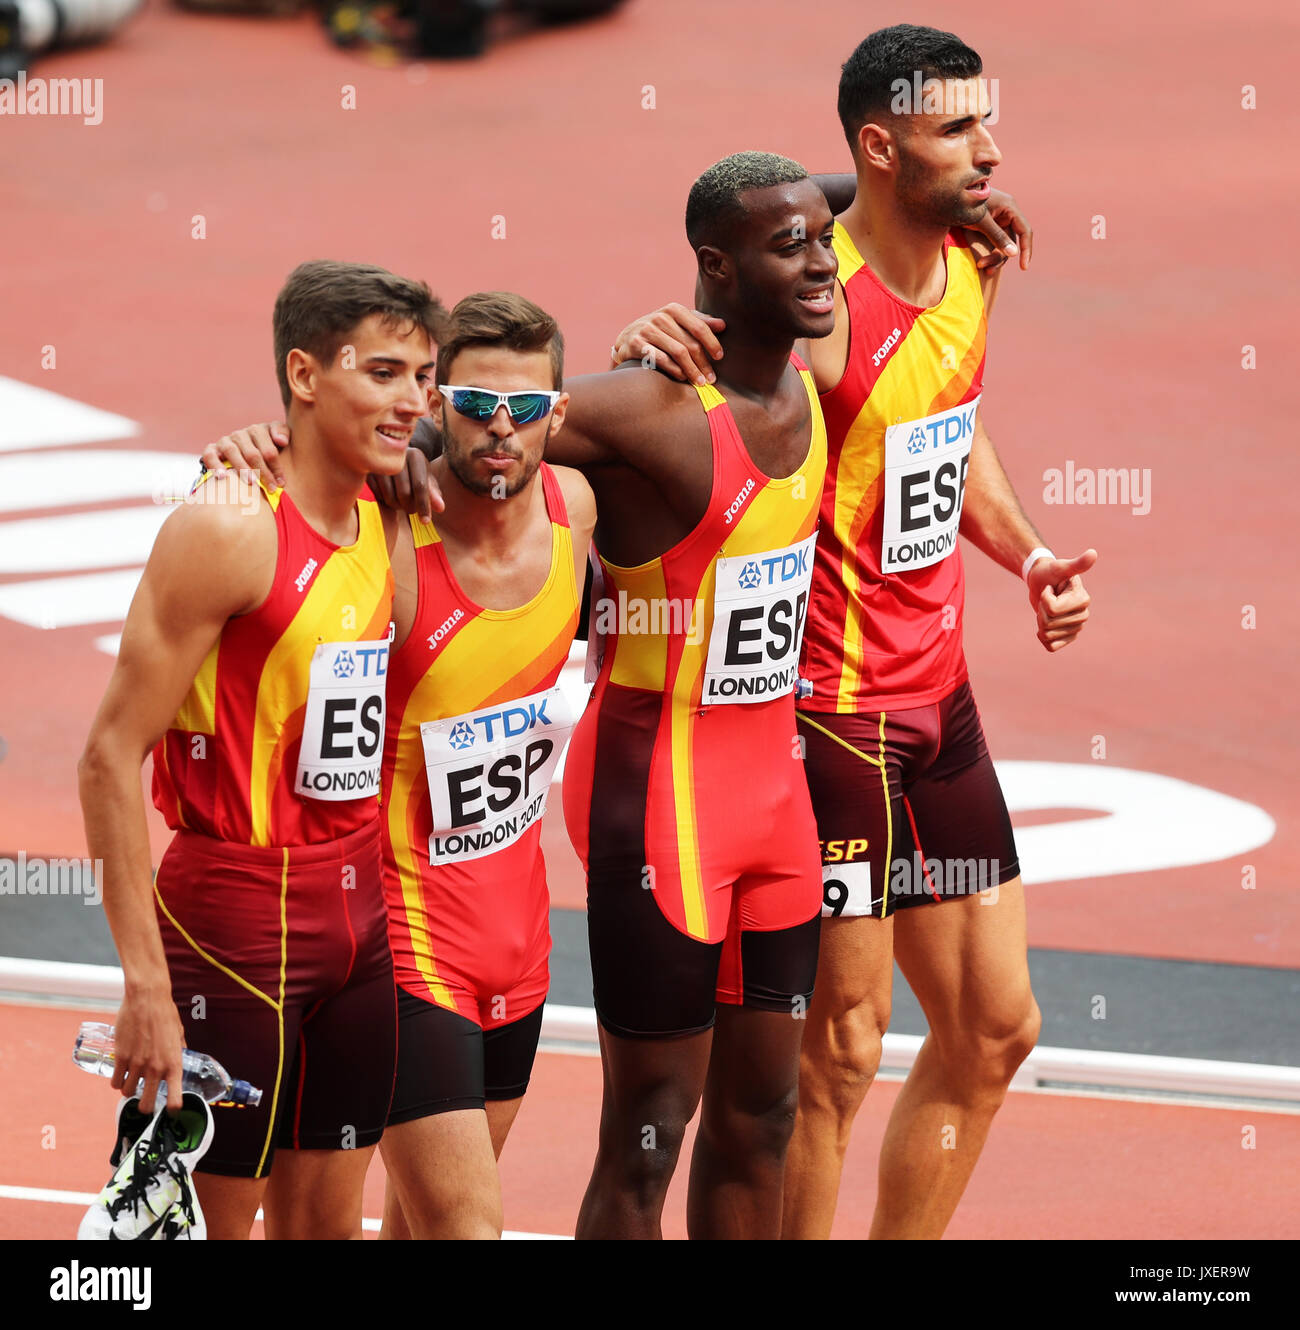 Óscar HUSILLOS, Lucas BÚA, Darwin ECHEVERRY, Samuel GARCÍA (Spain) after running in the Men's 4 x 400m Heat 1 at the 2017 IAAF World Championships, Queen Elizabeth Olympic Park, Stratford, London, UK. Stock Photo